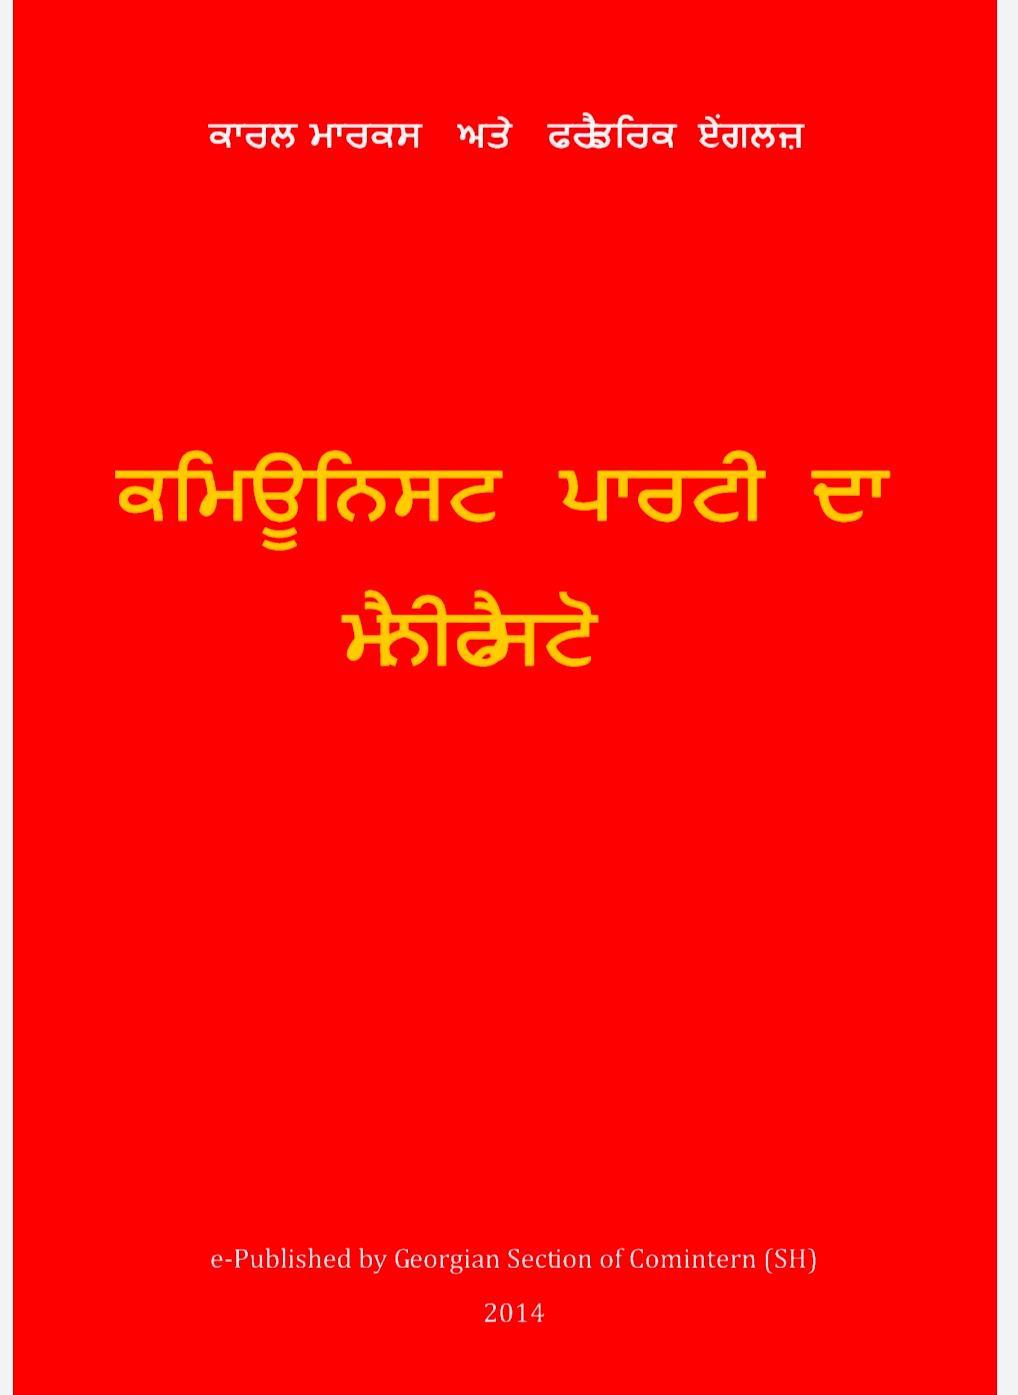 Karl Marx, Friedrich Engels: ਕਮਿਊਨਿਸਟ ਪਾਰਟੀ ਦਾ ਮੈਨੀਫੈਸਟੋ (Punjabi language, 2014, Shmg press)